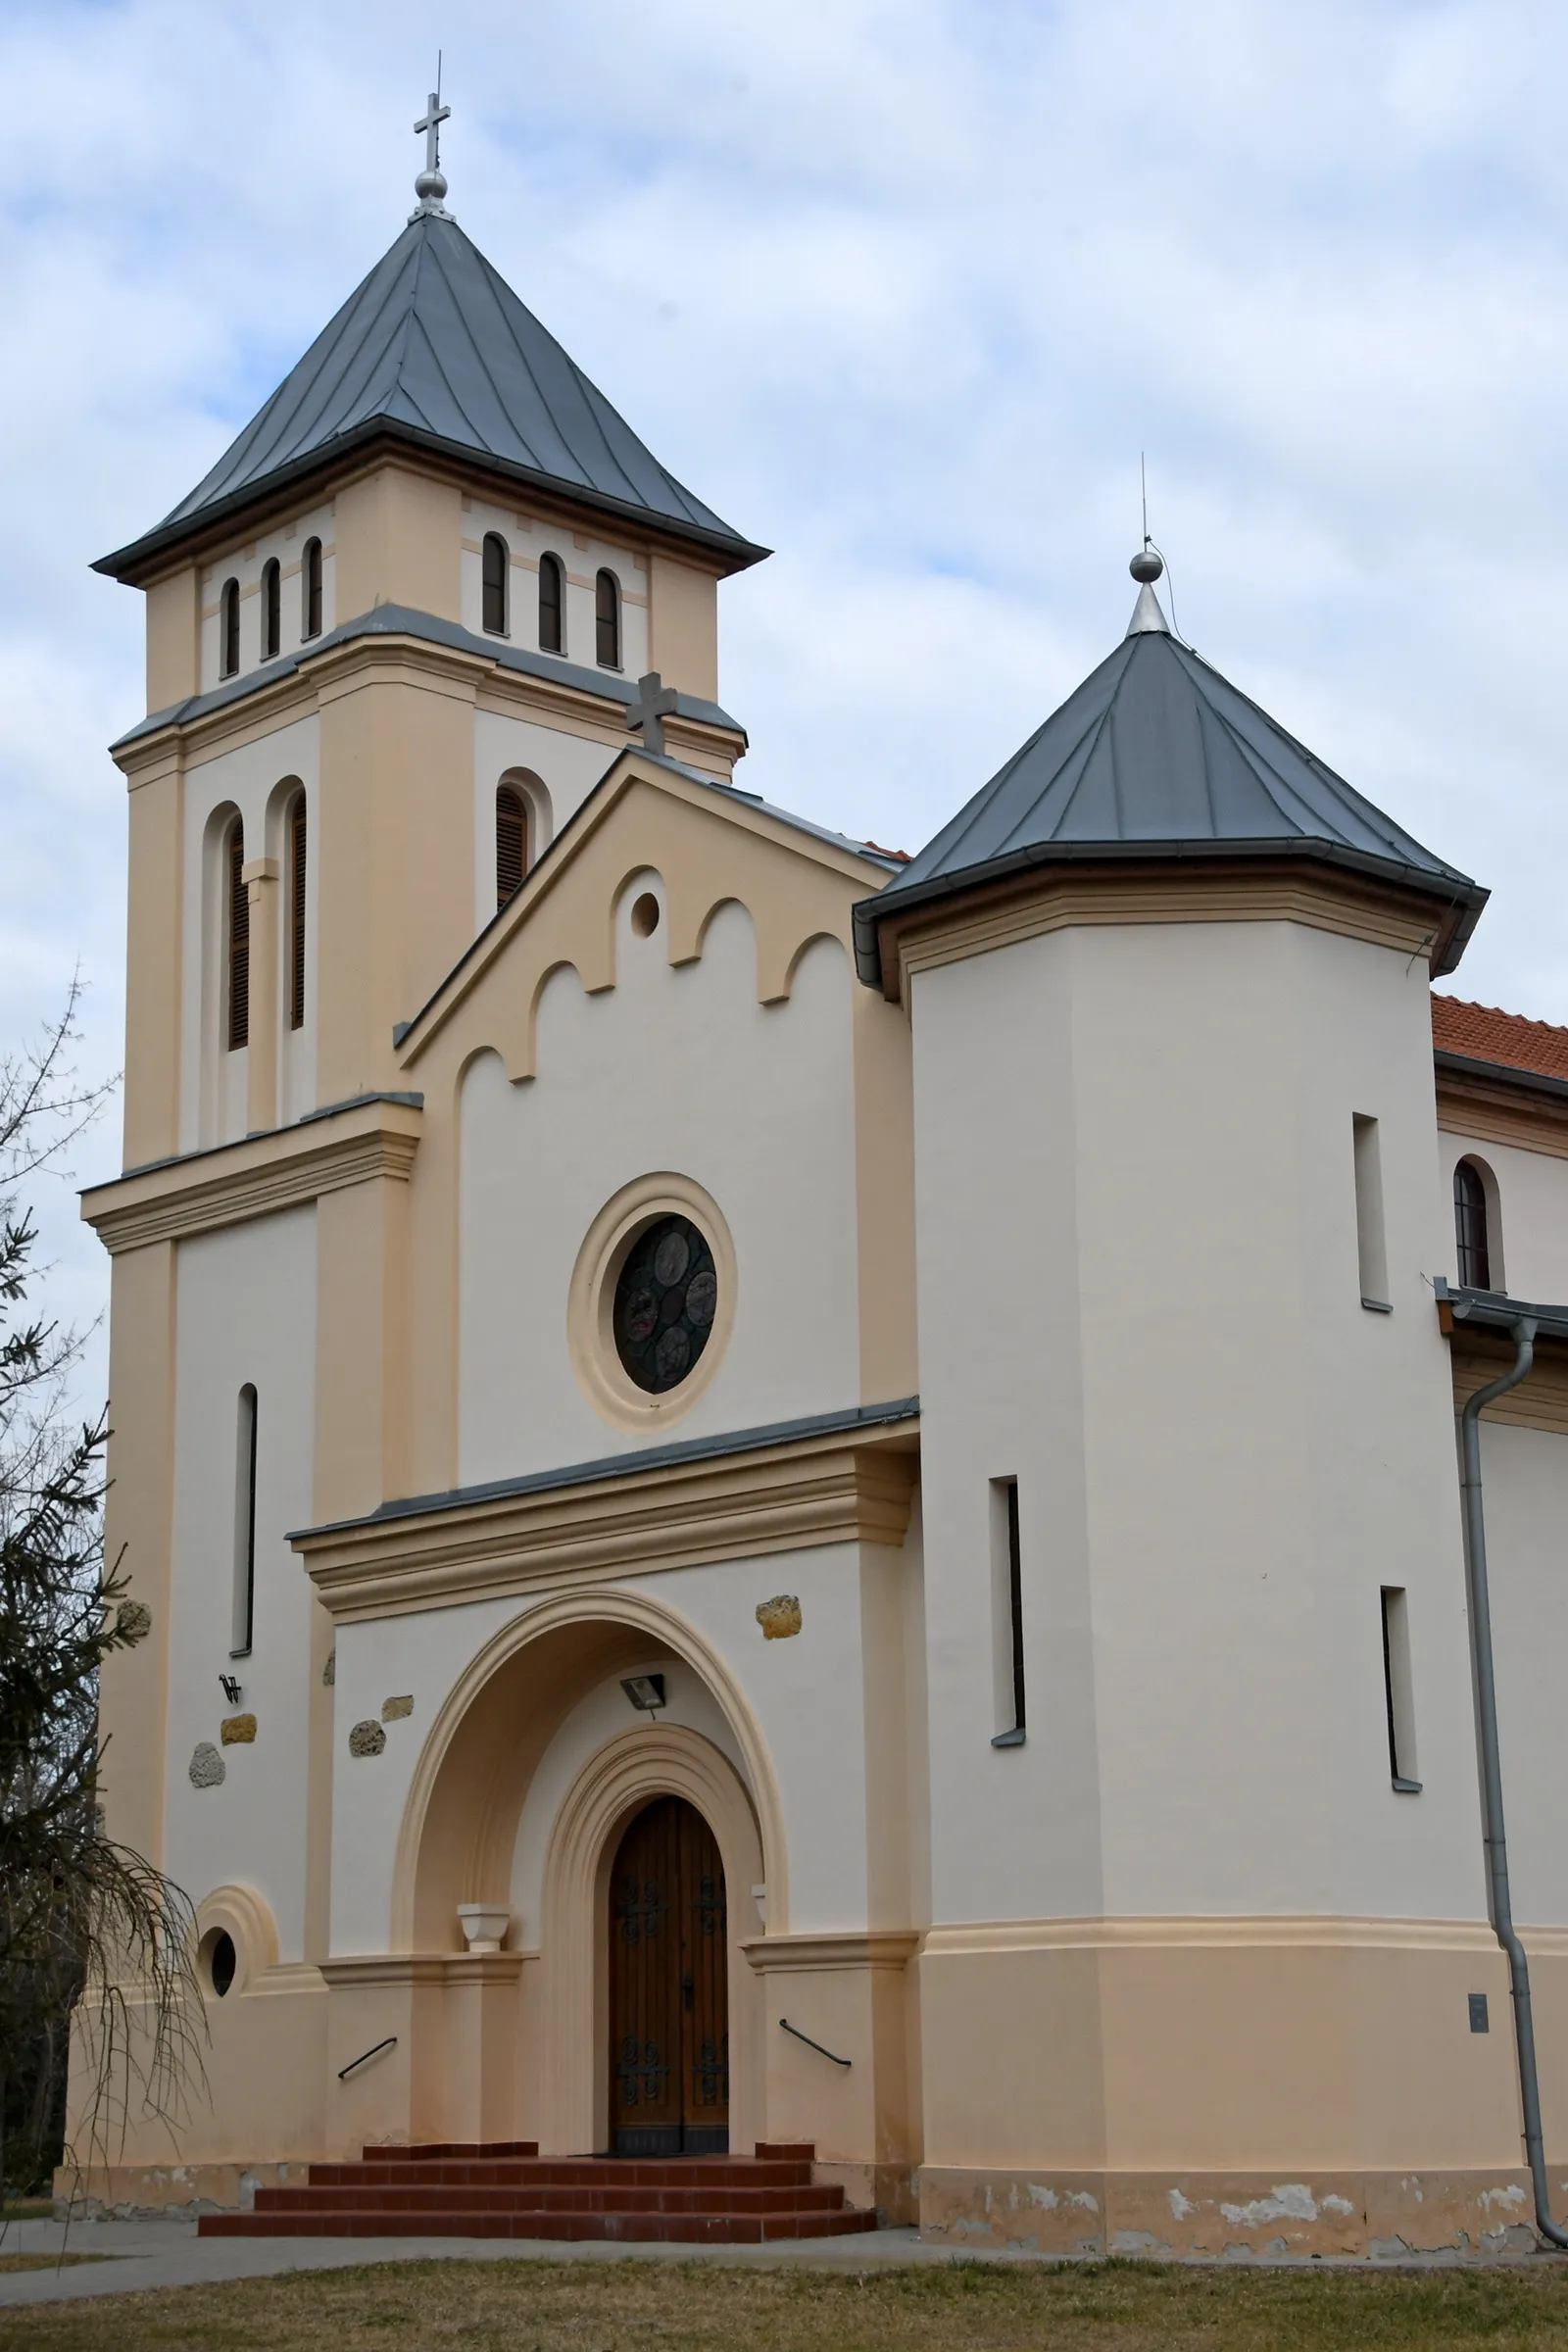 Photo showing: Roman Catholic church in Bugac, Hungary